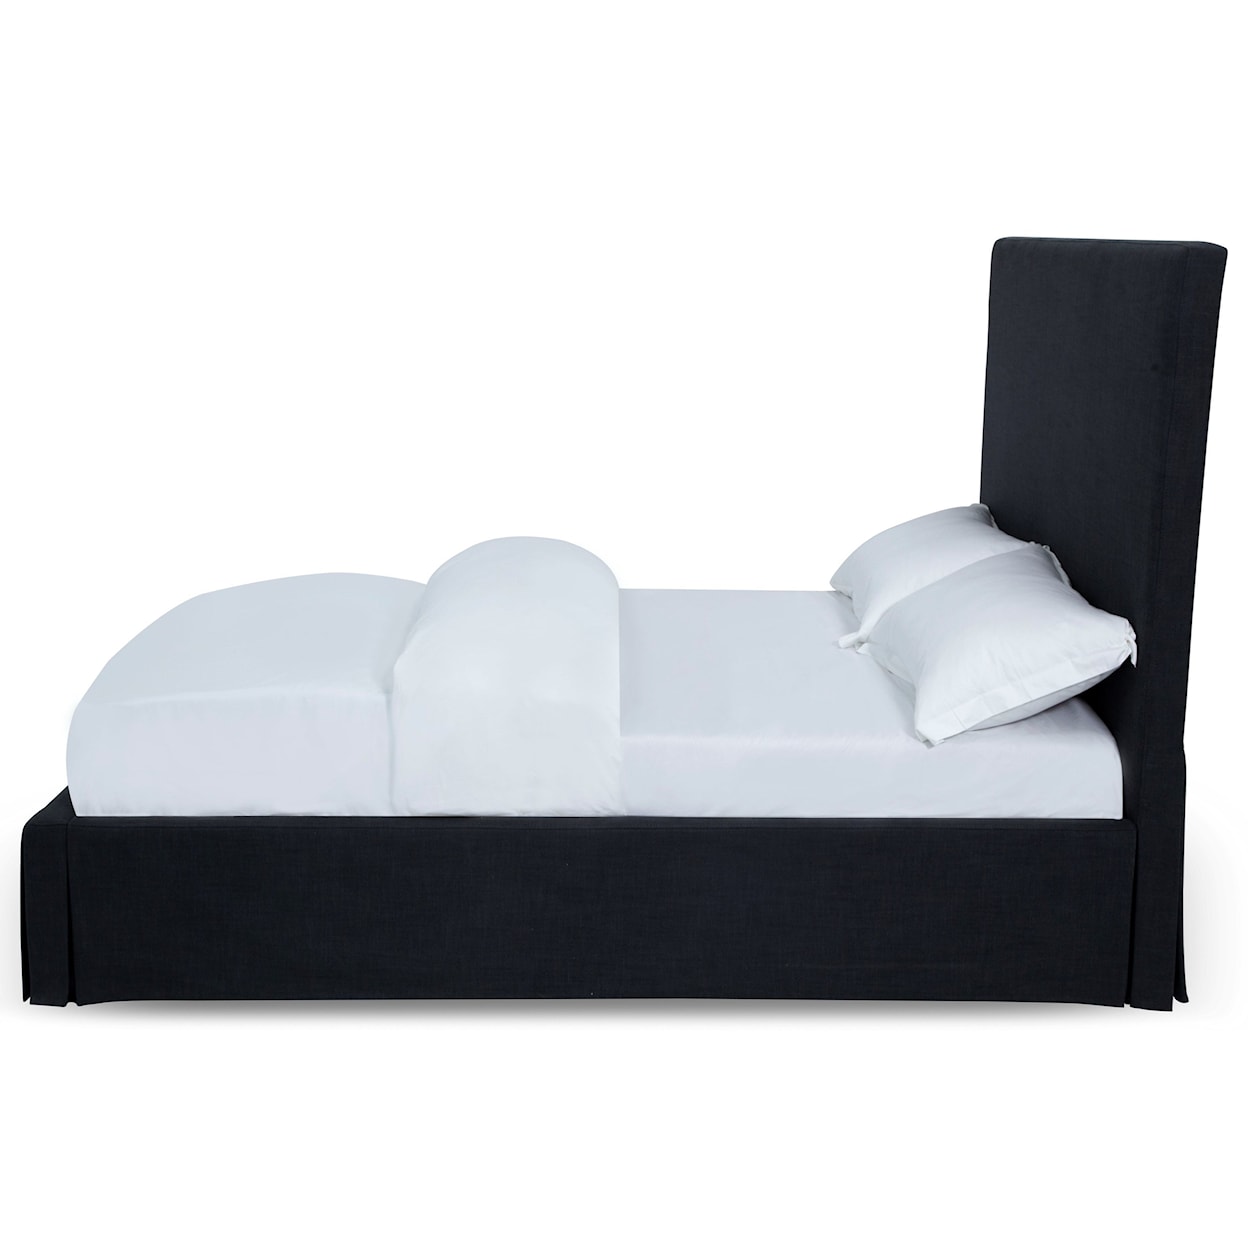 Modus International Juliette Cheviot Queen Upholstered Skirted Panel Bed